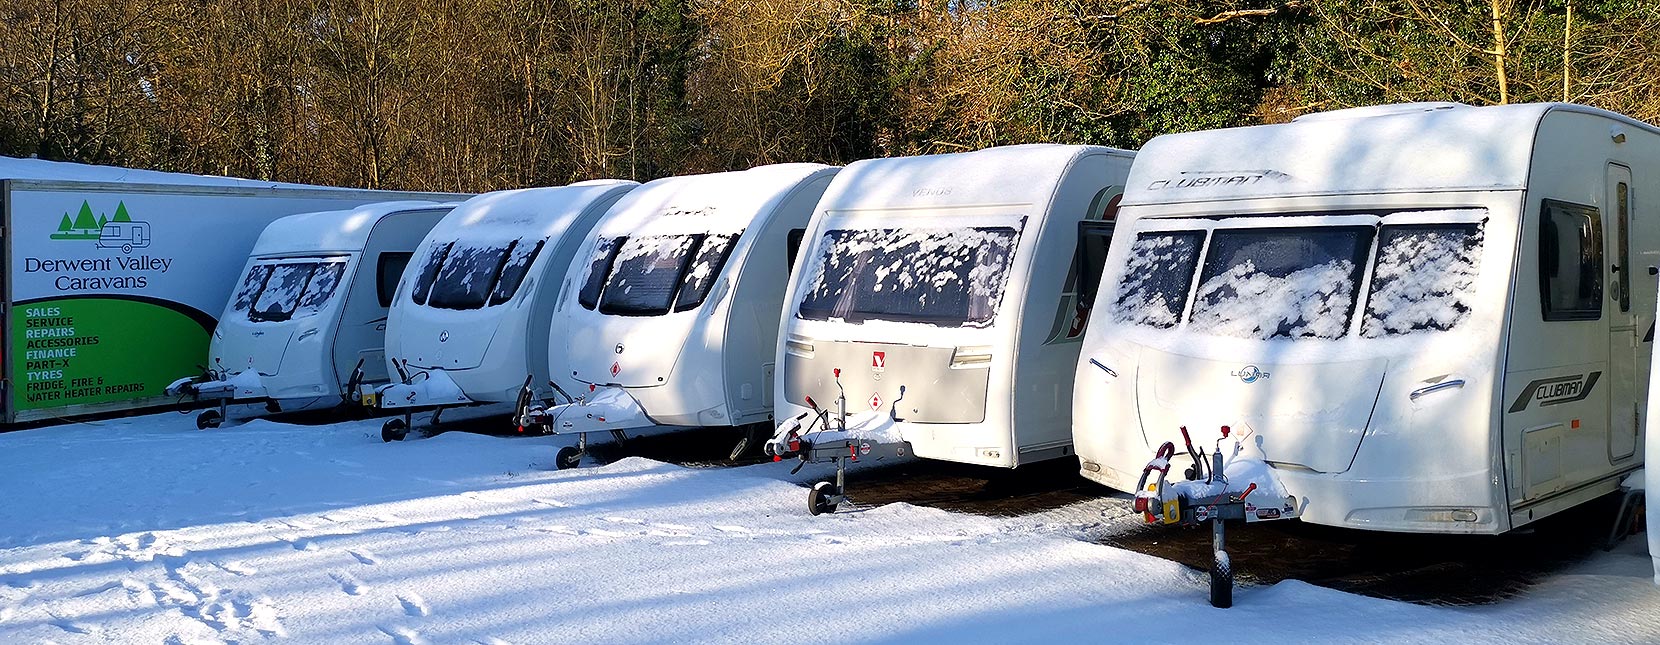 Caravans with snow covering at Derwent Valley Caravans